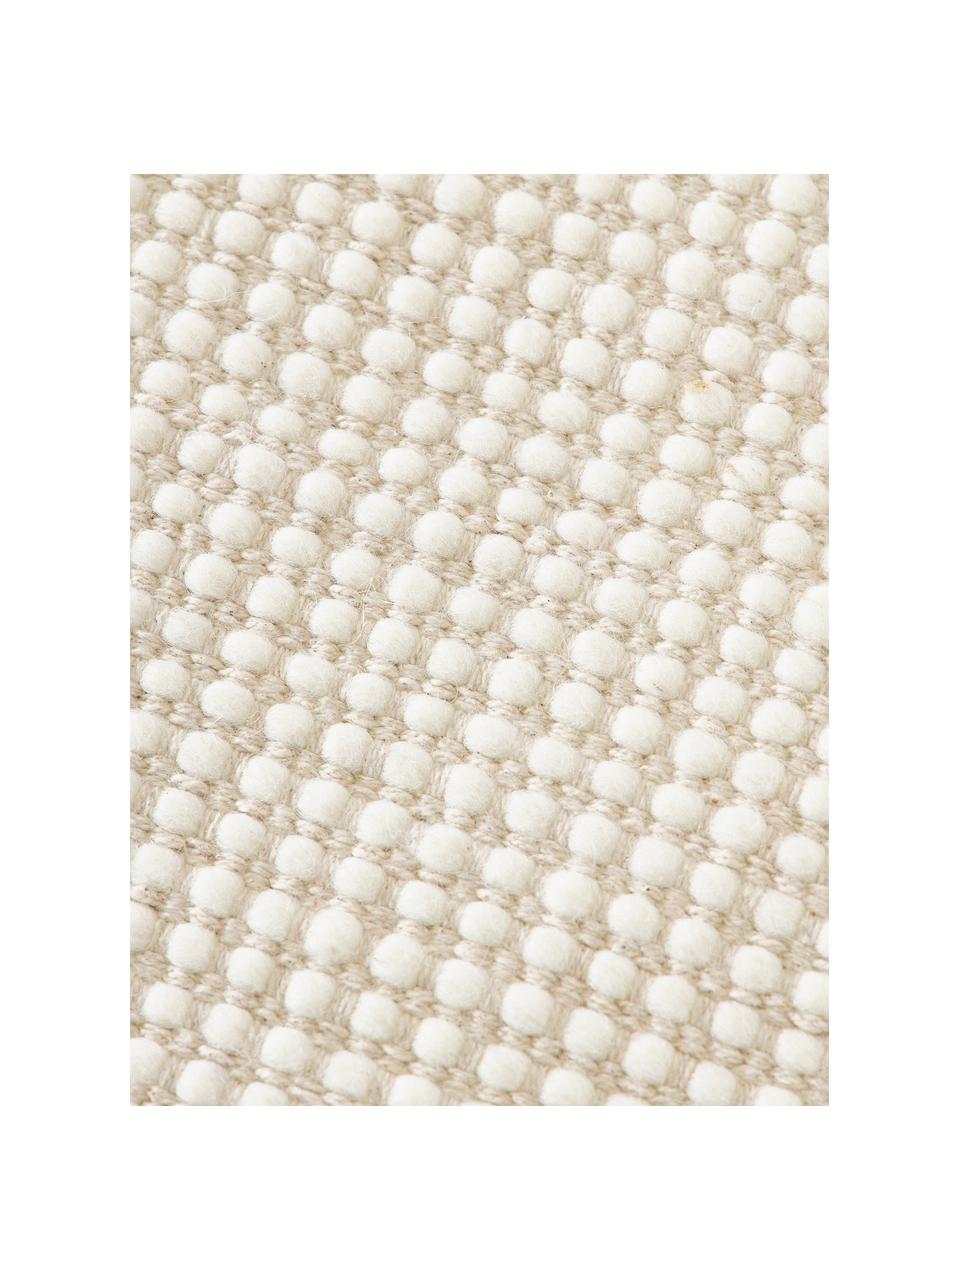 Passatoia in lana tessuta a mano Amaro, Retro: 100% cotone, certificato , Bianco crema, Larg. 80 x Lung. 200 cm